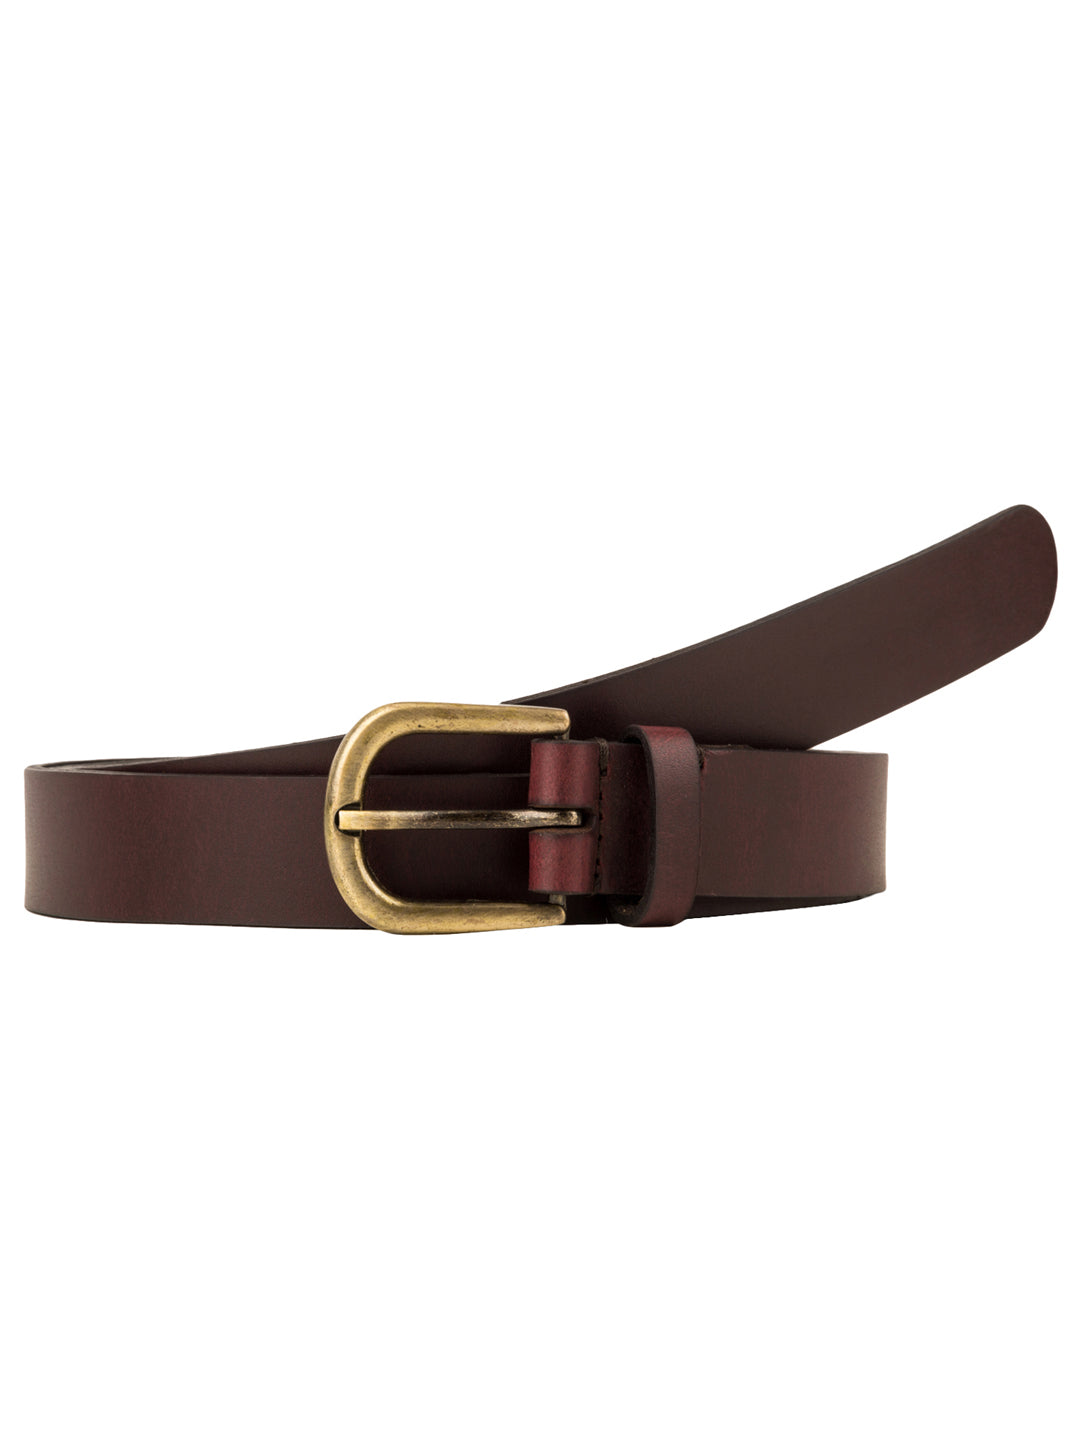 leather bordo belt Aditi Wasan